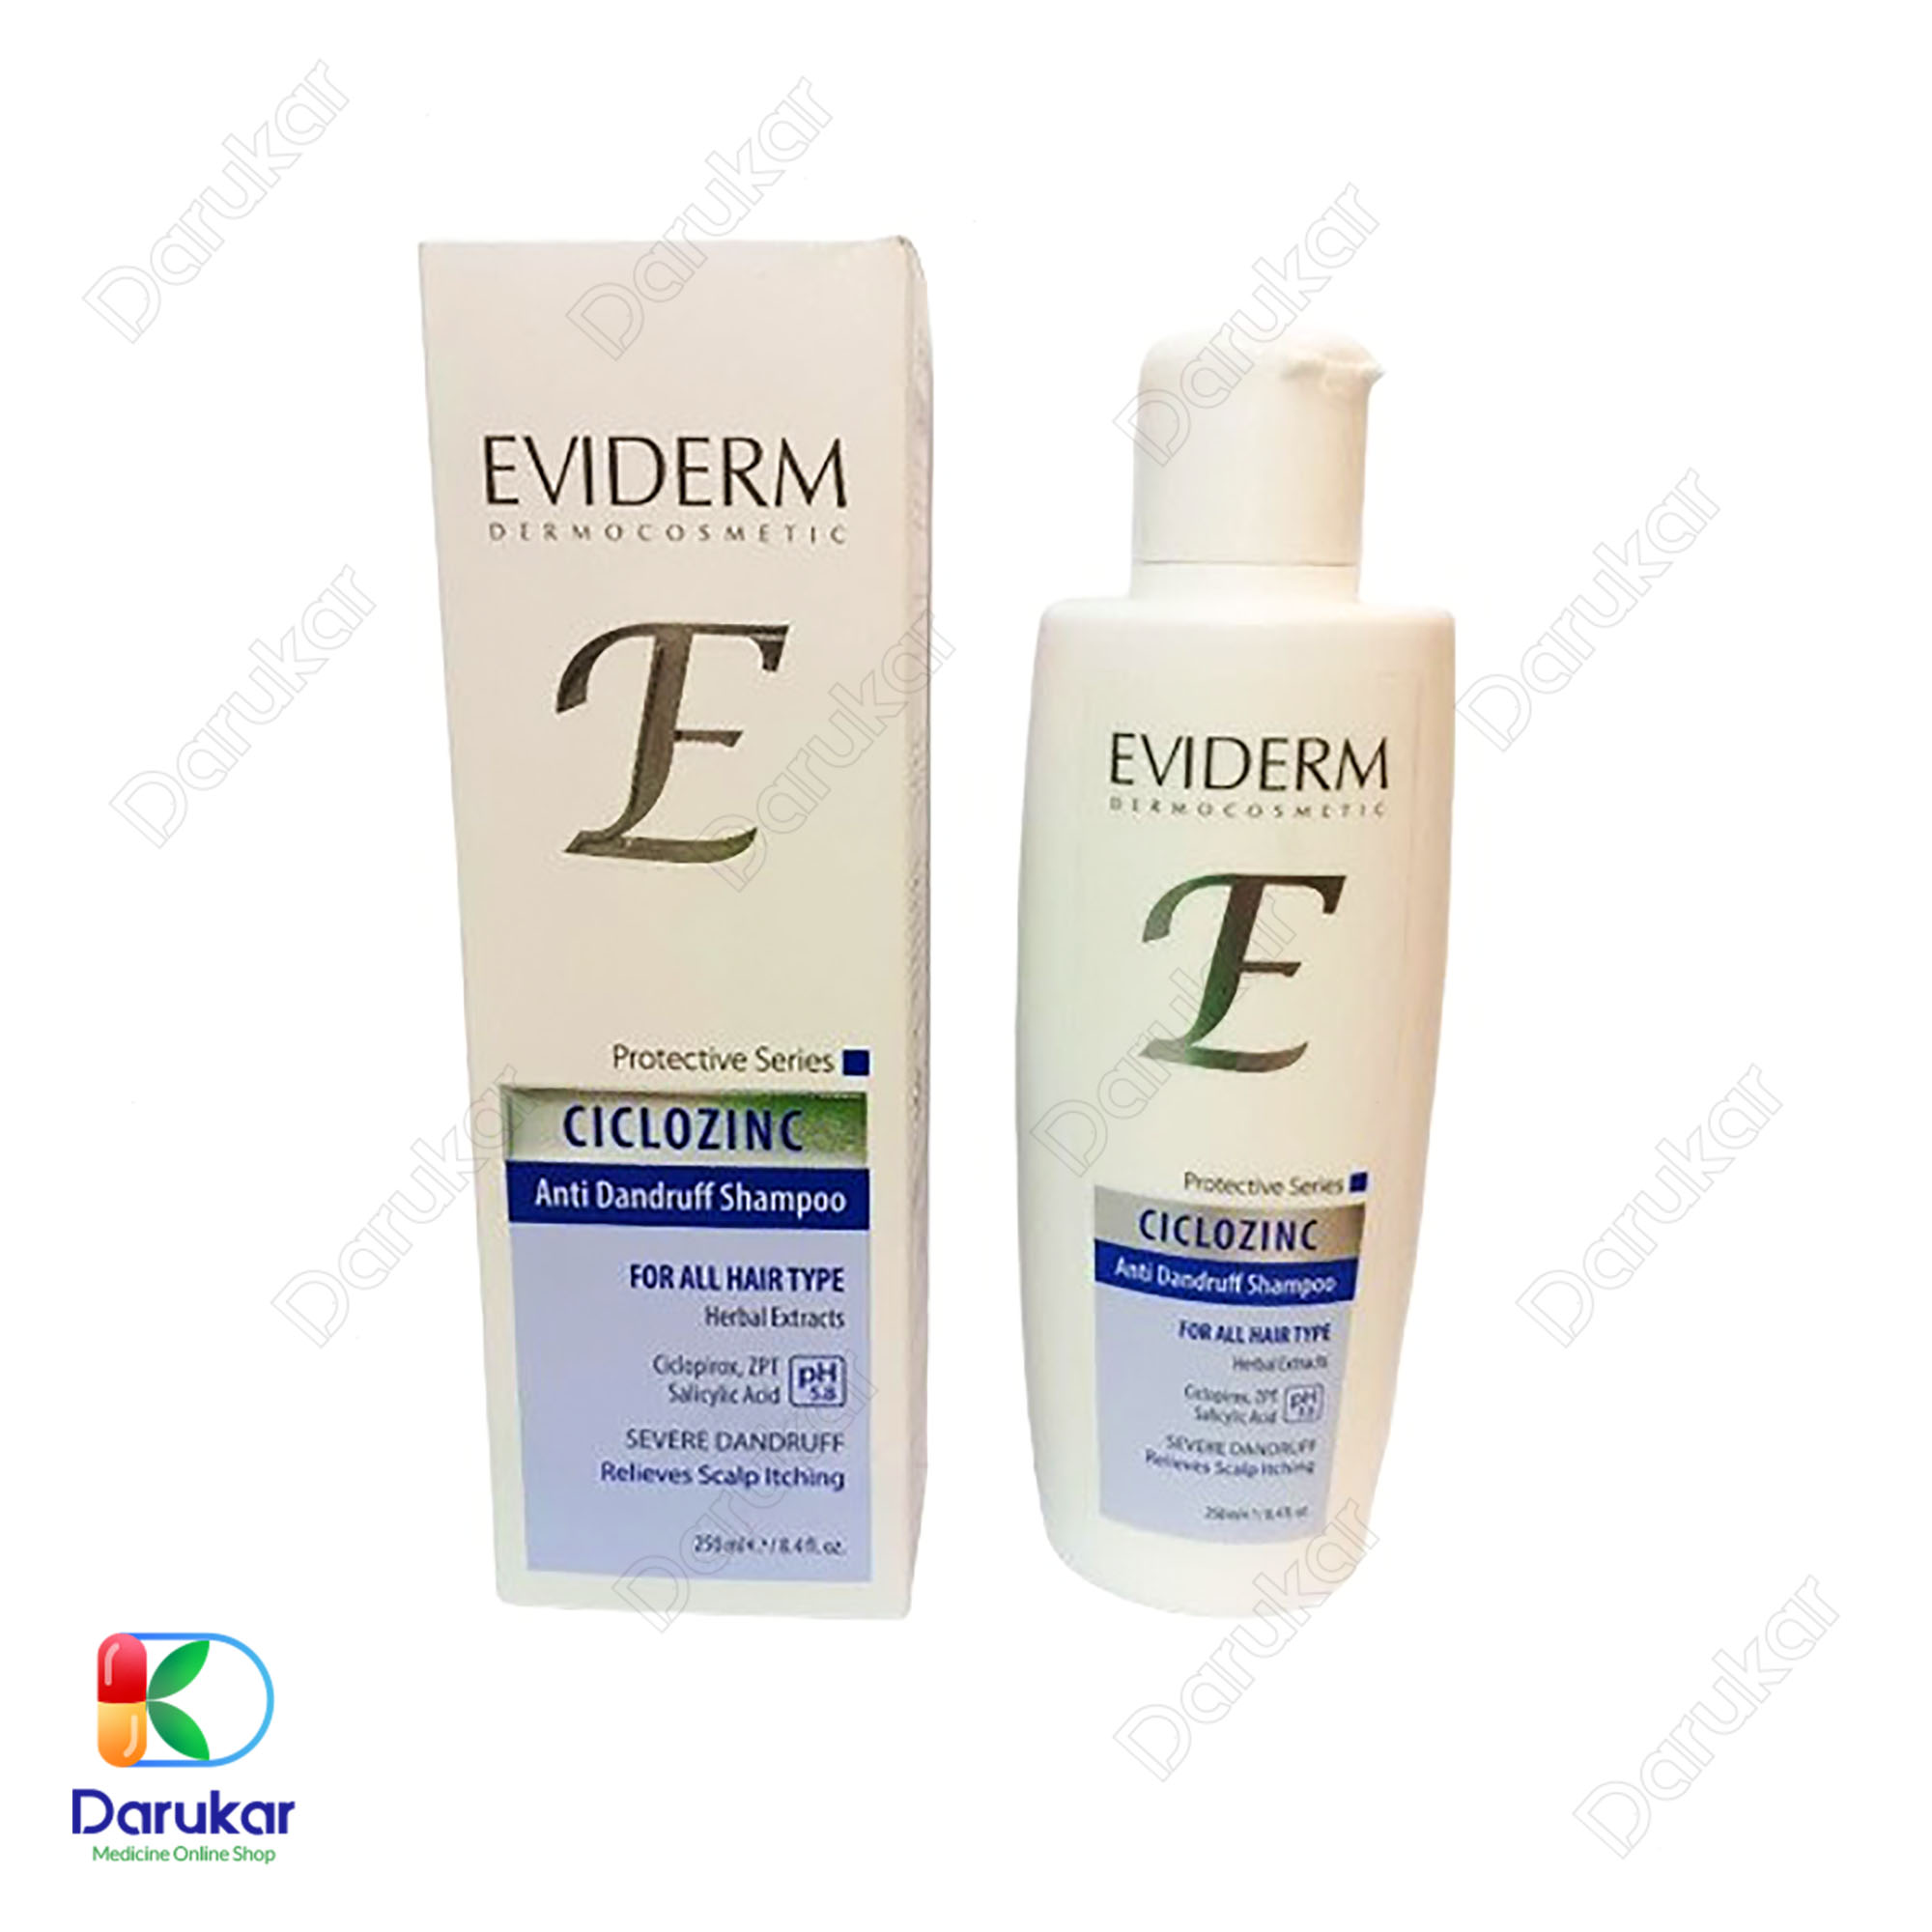 eviderm ciclozinc anti dandruff shampoo for all types of dandruff 1